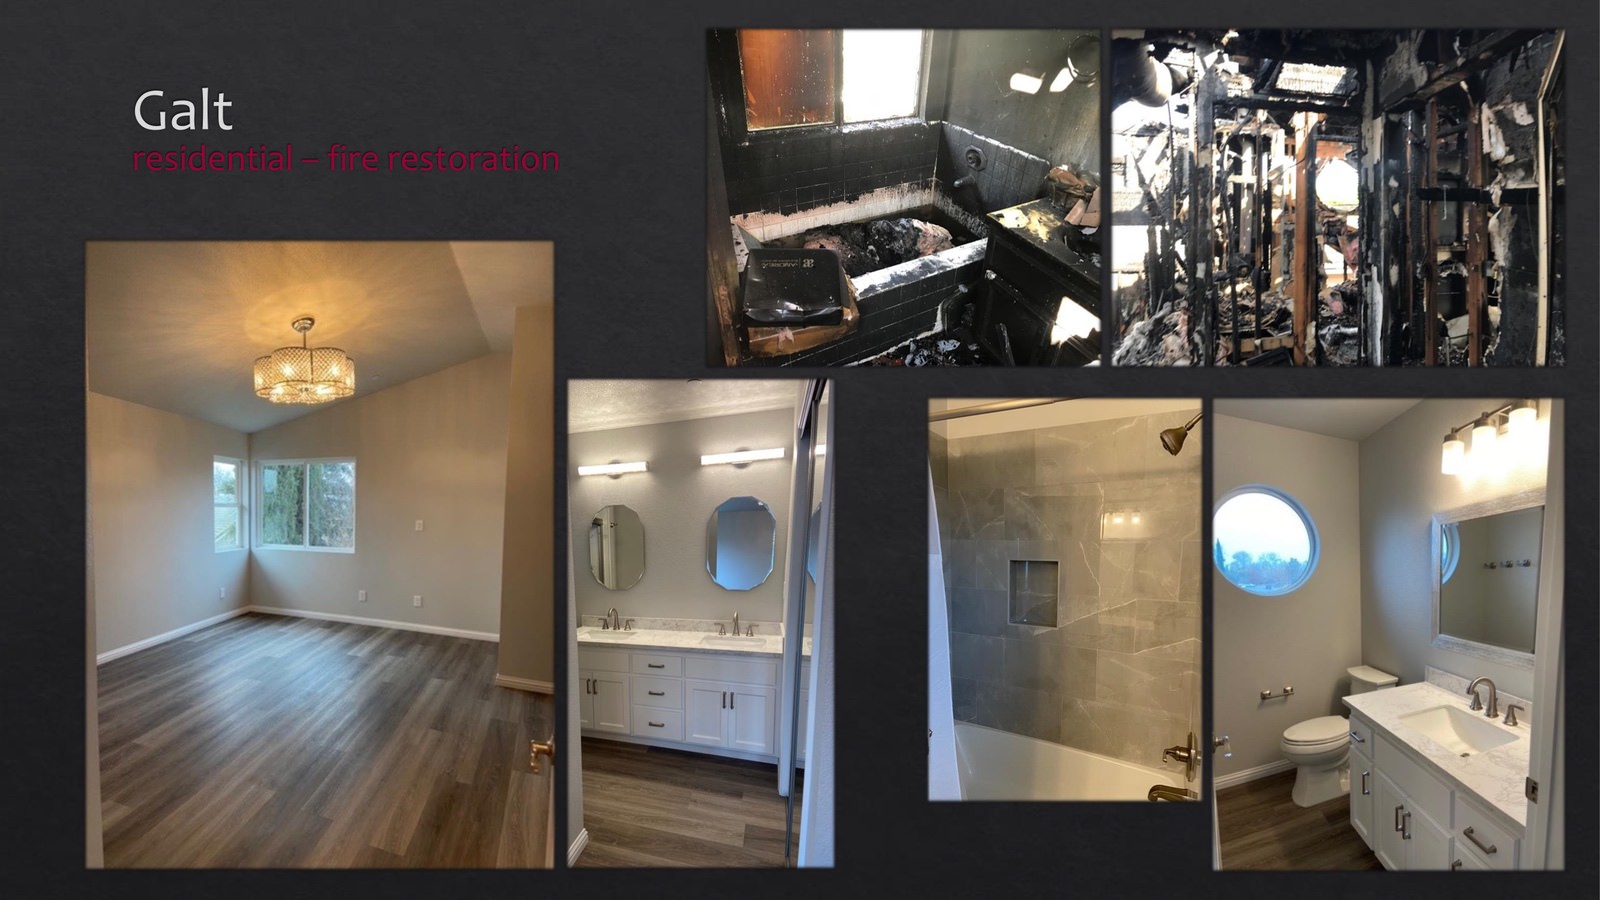 Galt Residential fire restoration - bathroom + living room